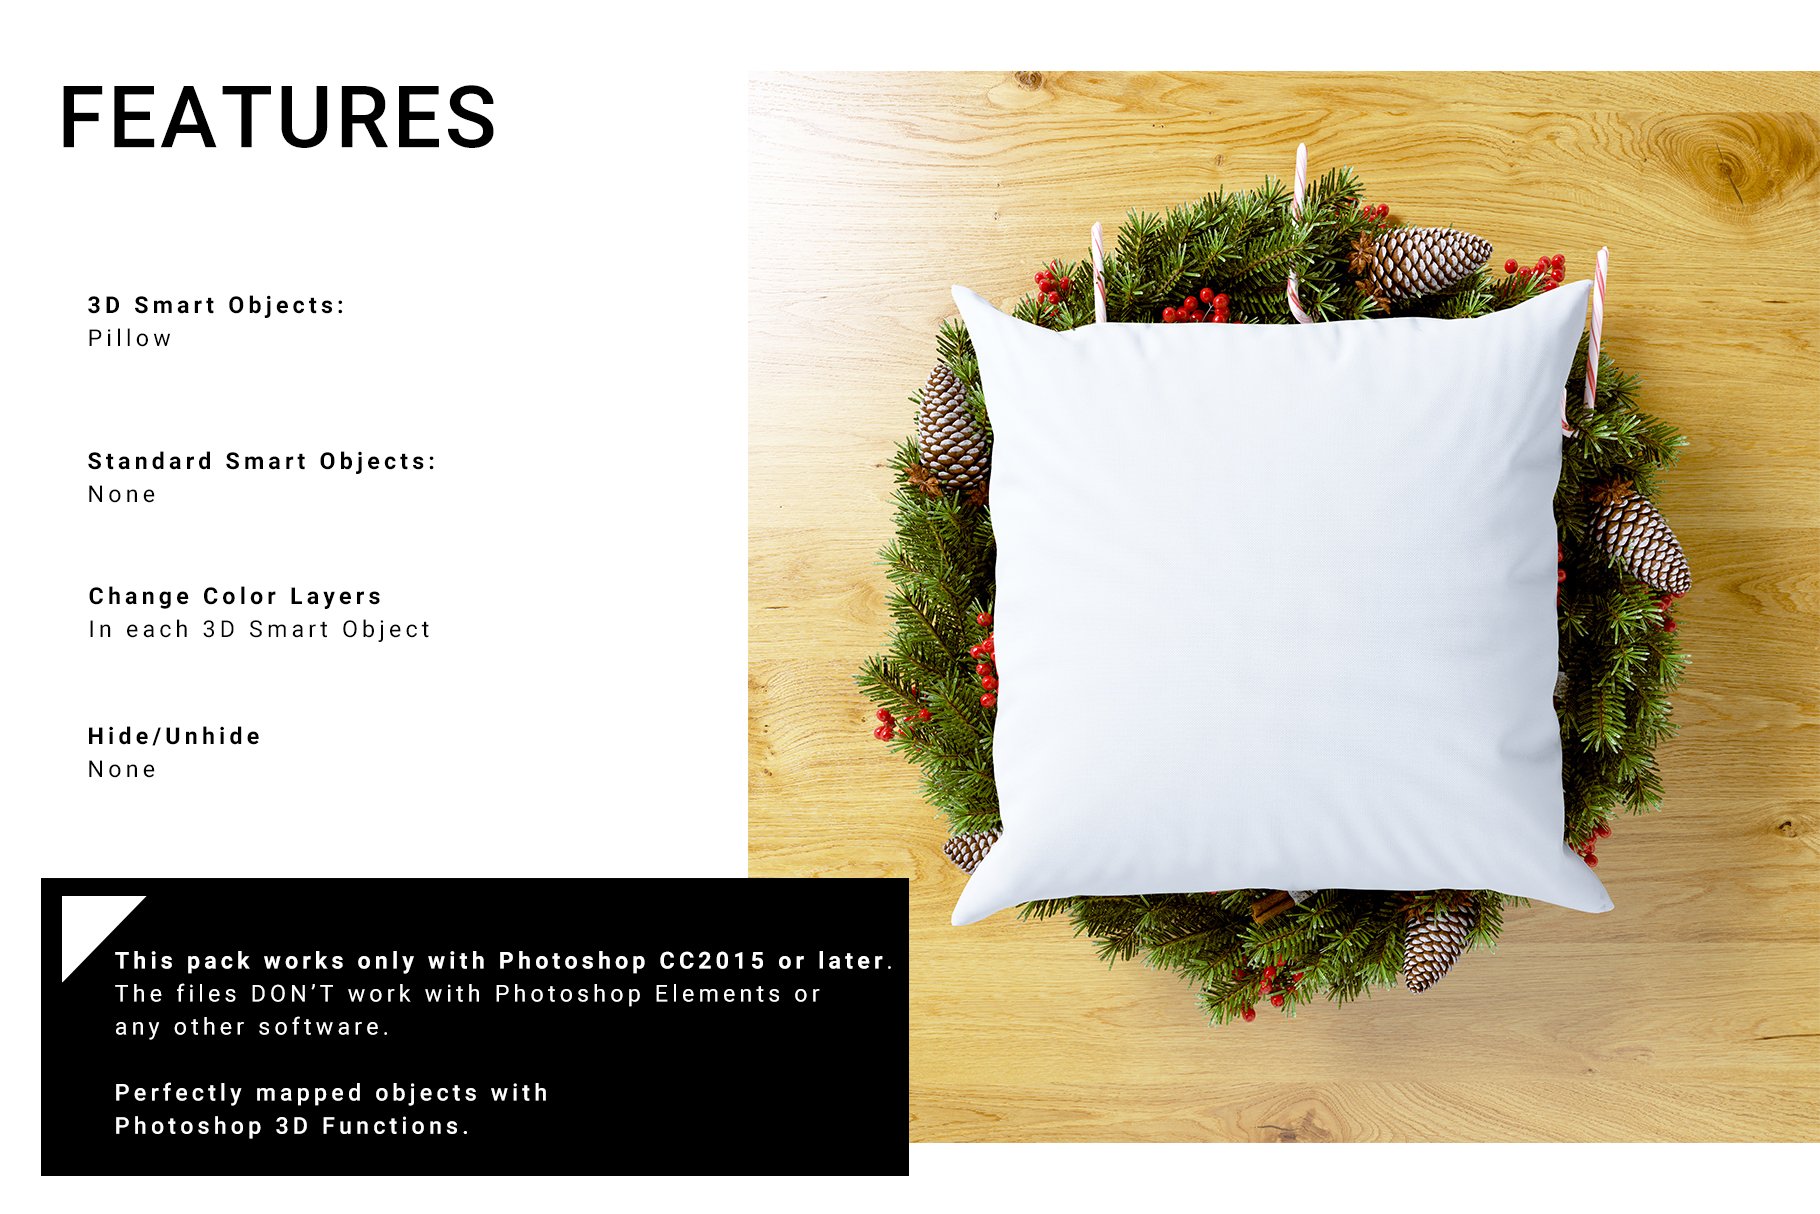 Christmas Textile - Pillow Set